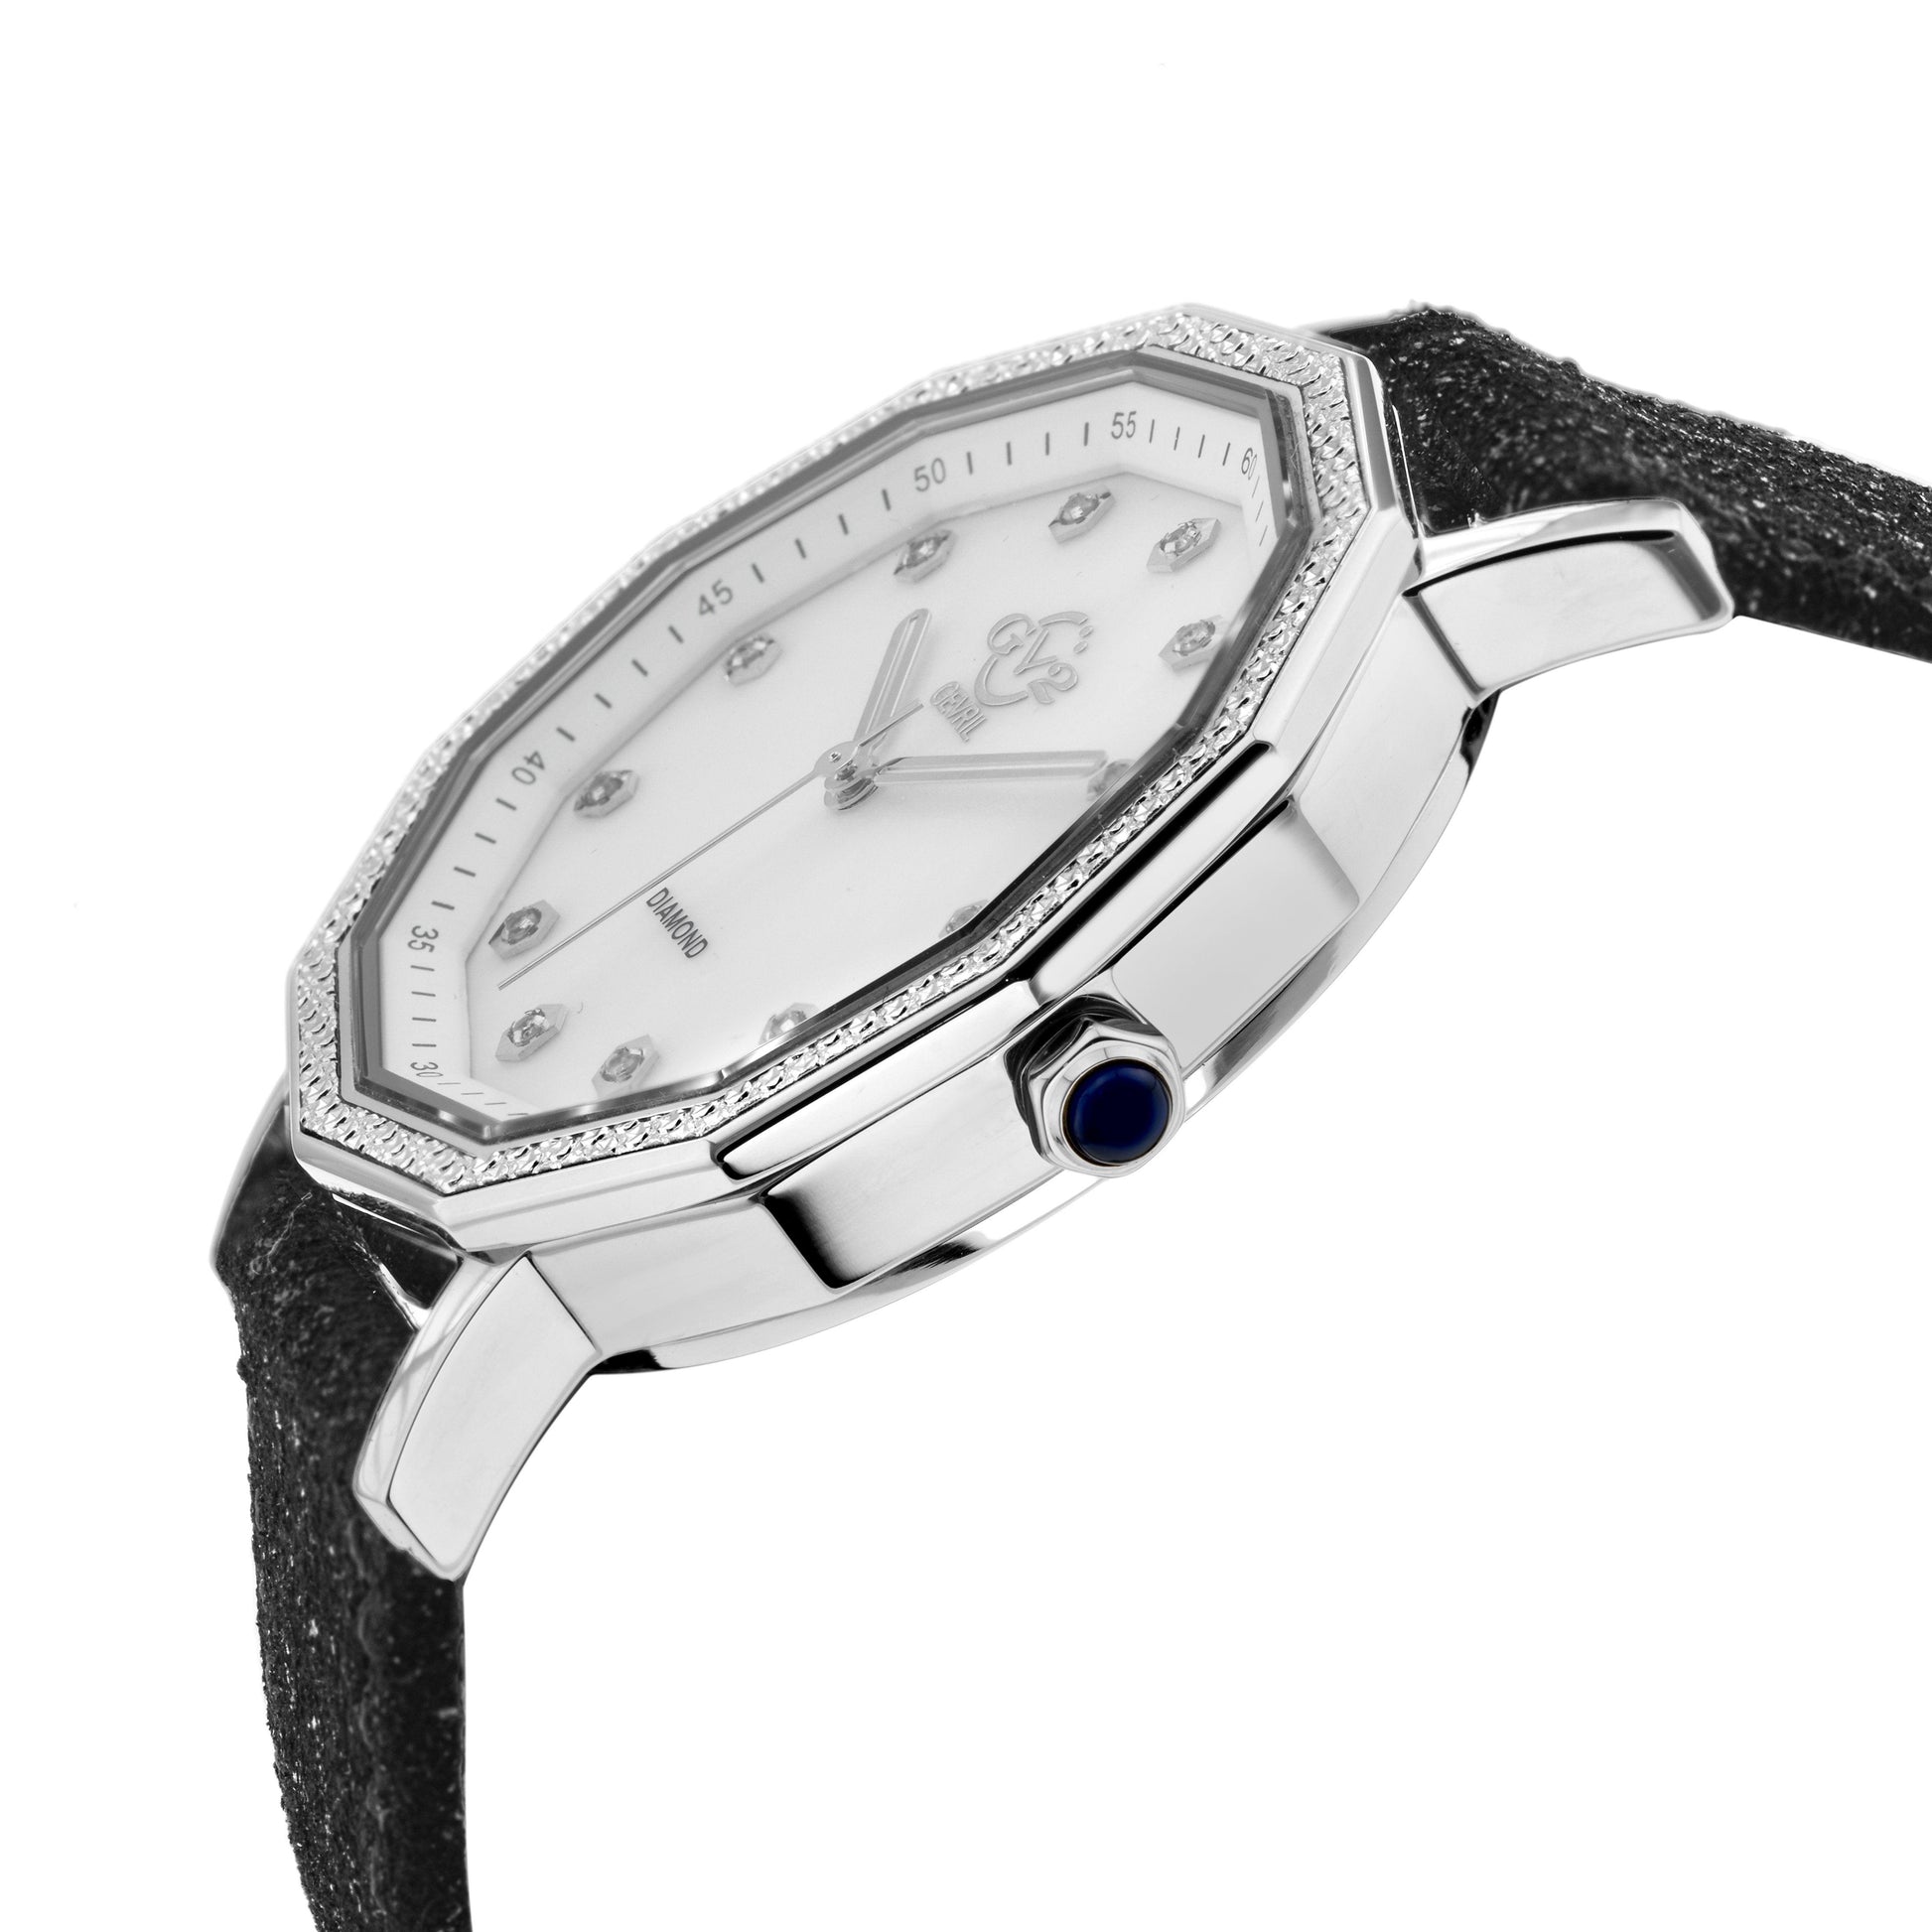 Gevril-Luxury-Swiss-Watches-GV2 Spello Diamond-14500